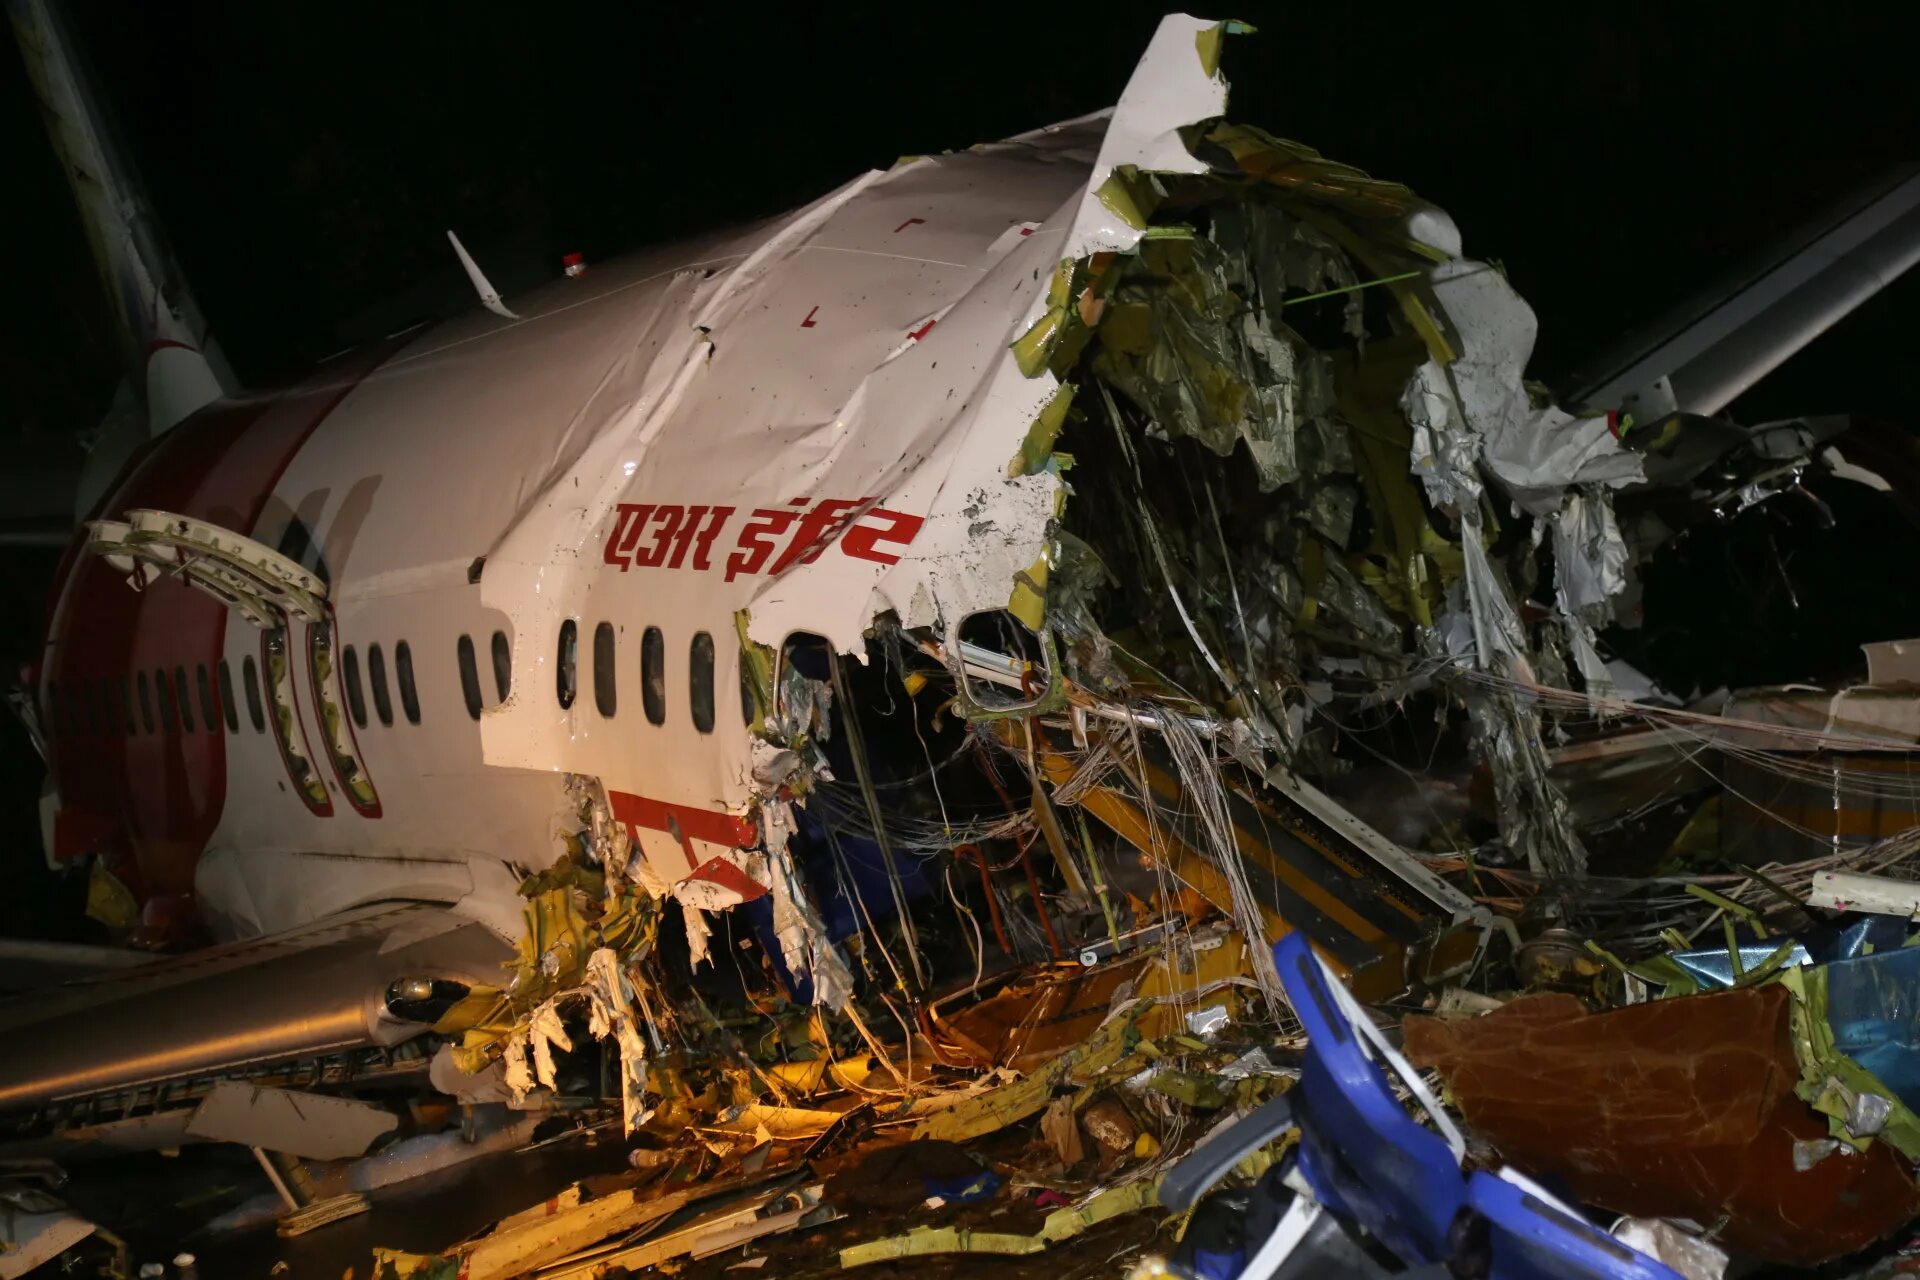 Boeing 747 Air India катастрофа. Боинг 747 АИР Индия теракт. Авиакатастрофа посадка